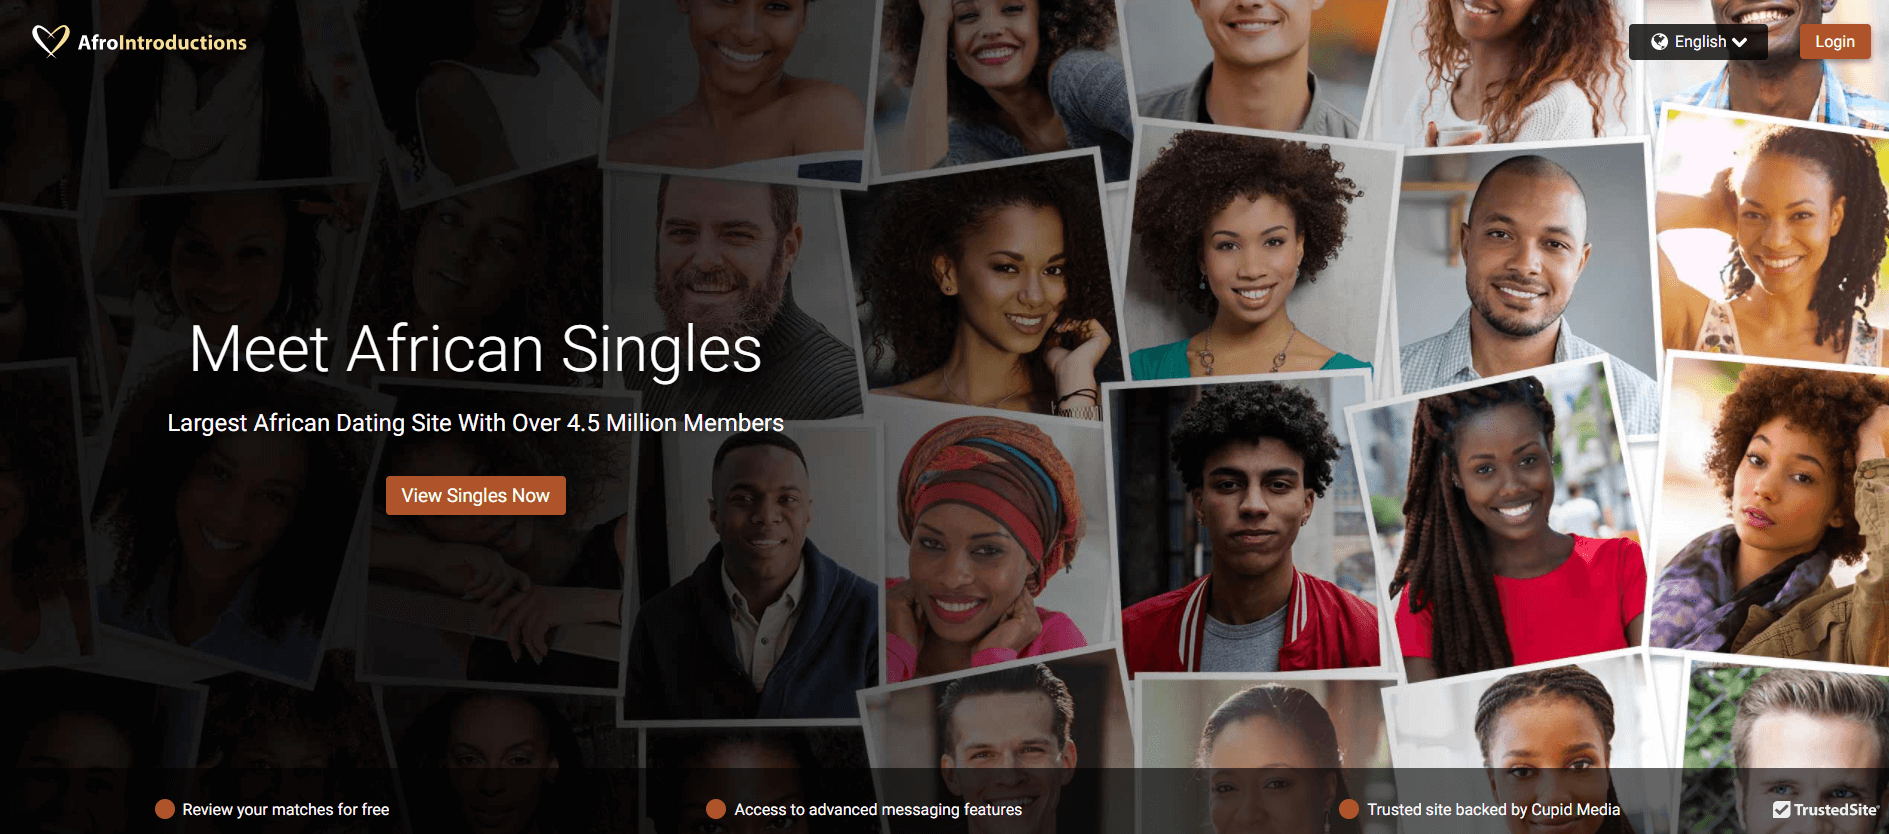 Sheraz Khan Yahoo Dating Black Dating Sites Review